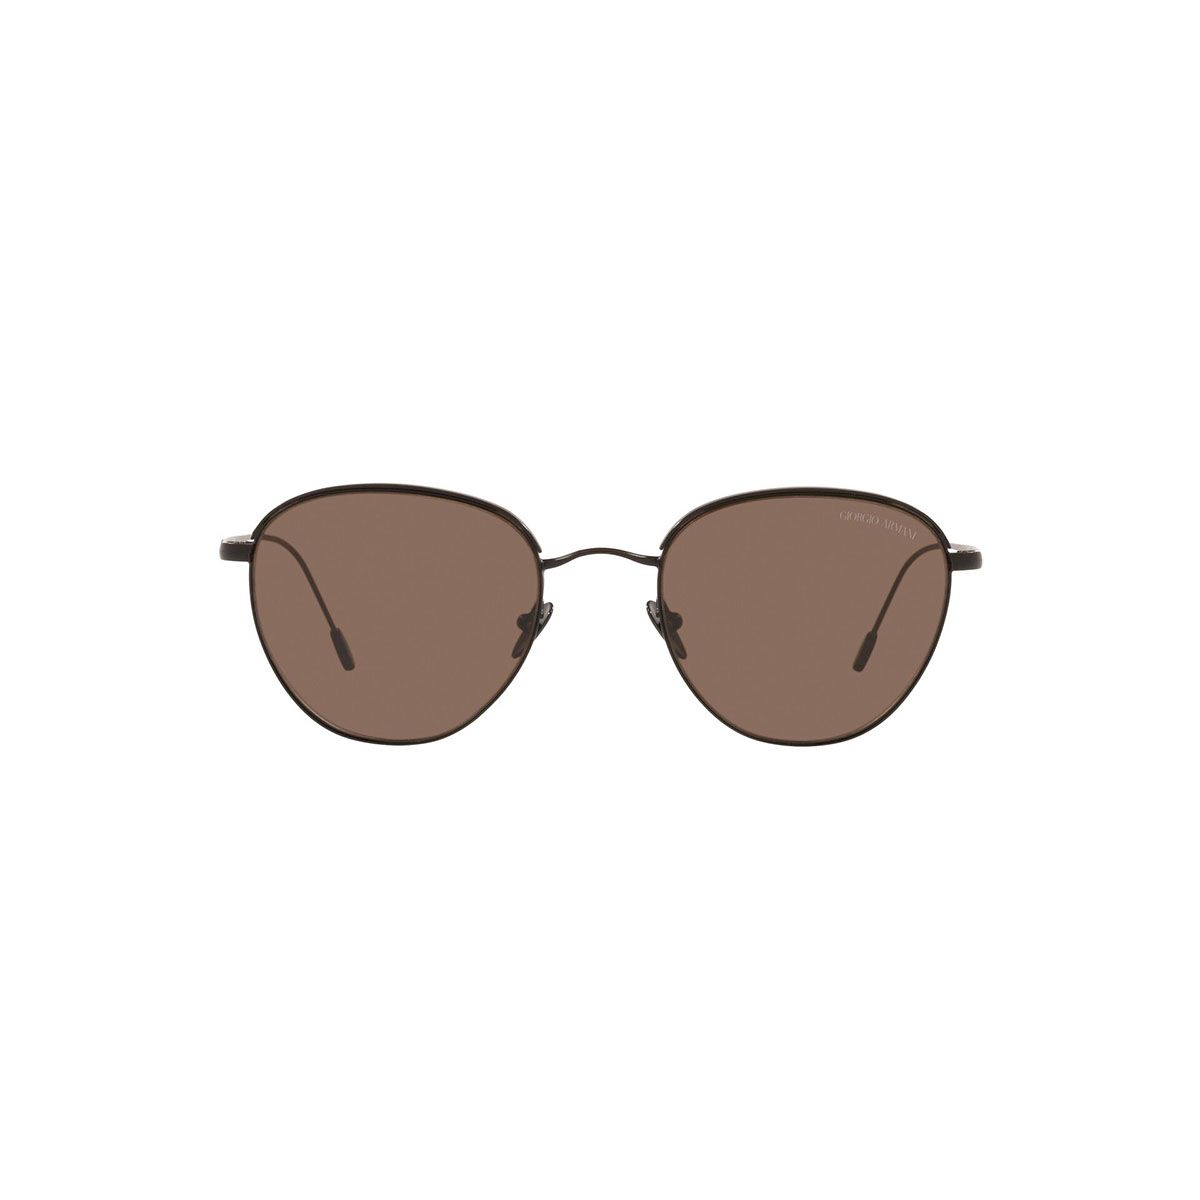 AR6048 Round Sunglasses 300173 - size 51